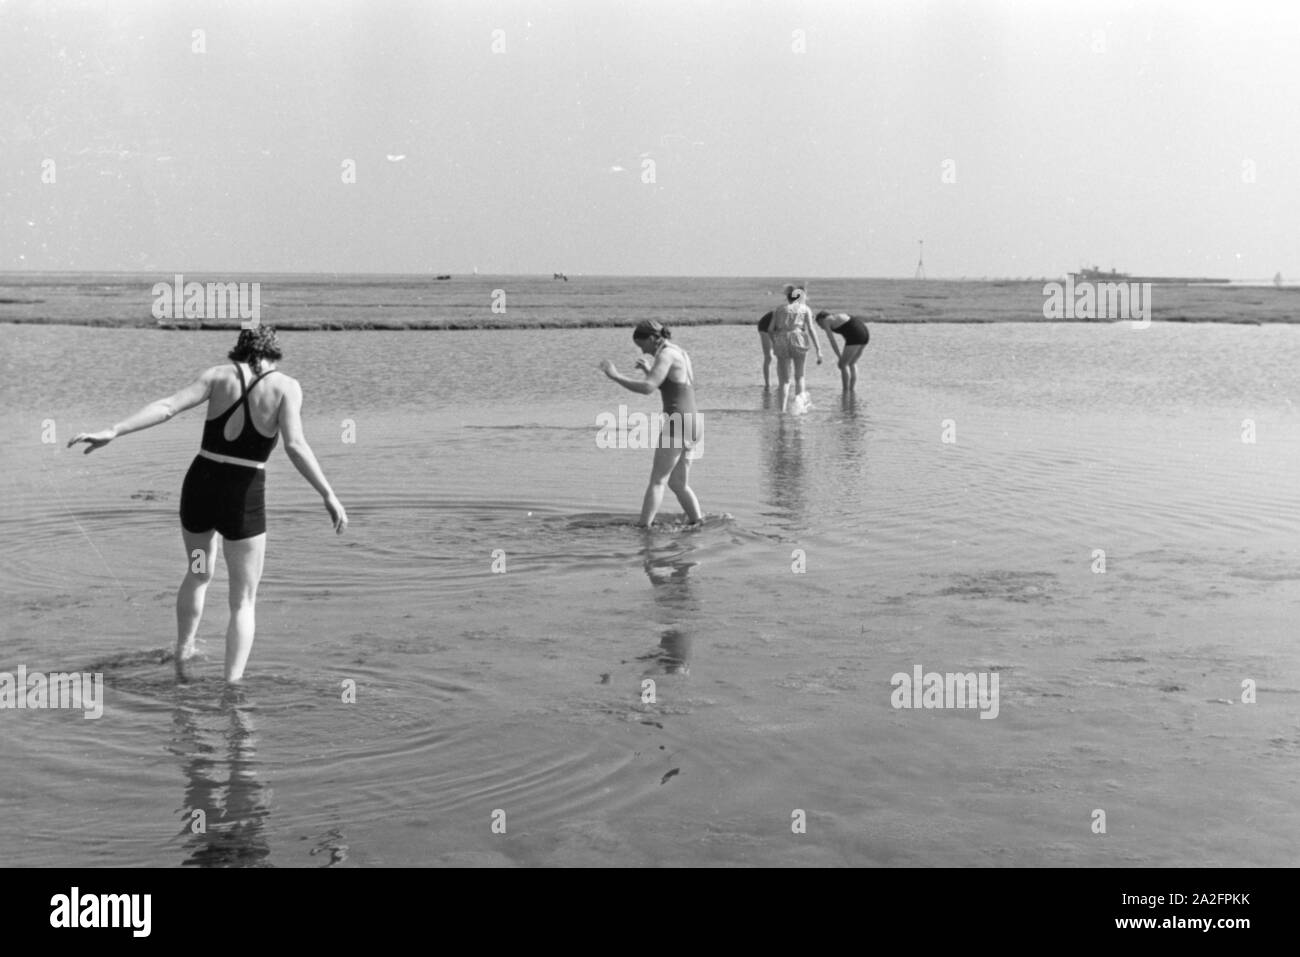 Urlauber am Strand der Nordseeinsel Juist, Deutschland 1930er Jahre. Holidaymakers on the beach of East Frisian island of Juist, Germany 1930s. Stock Photo